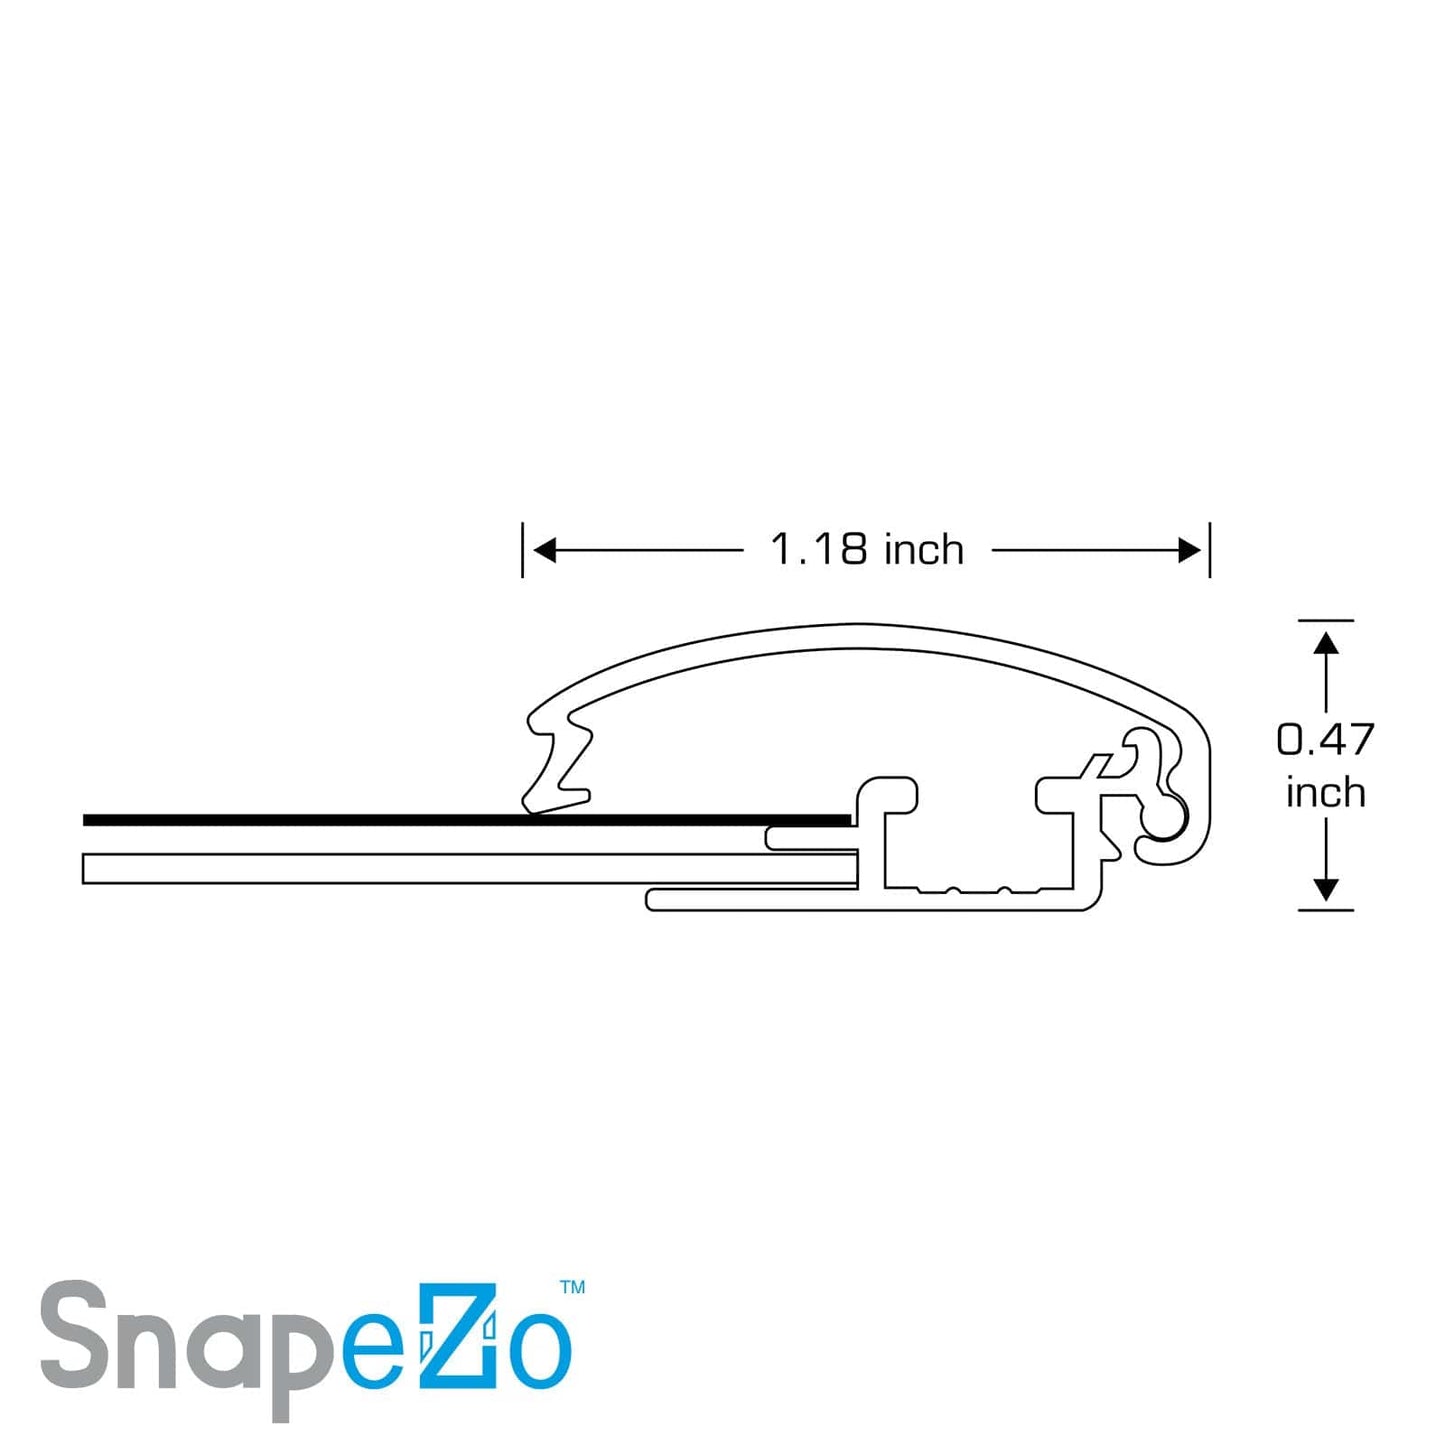 10x15 White SnapeZo® Snap Frame - 1.2" Profile - Snap Frames Direct